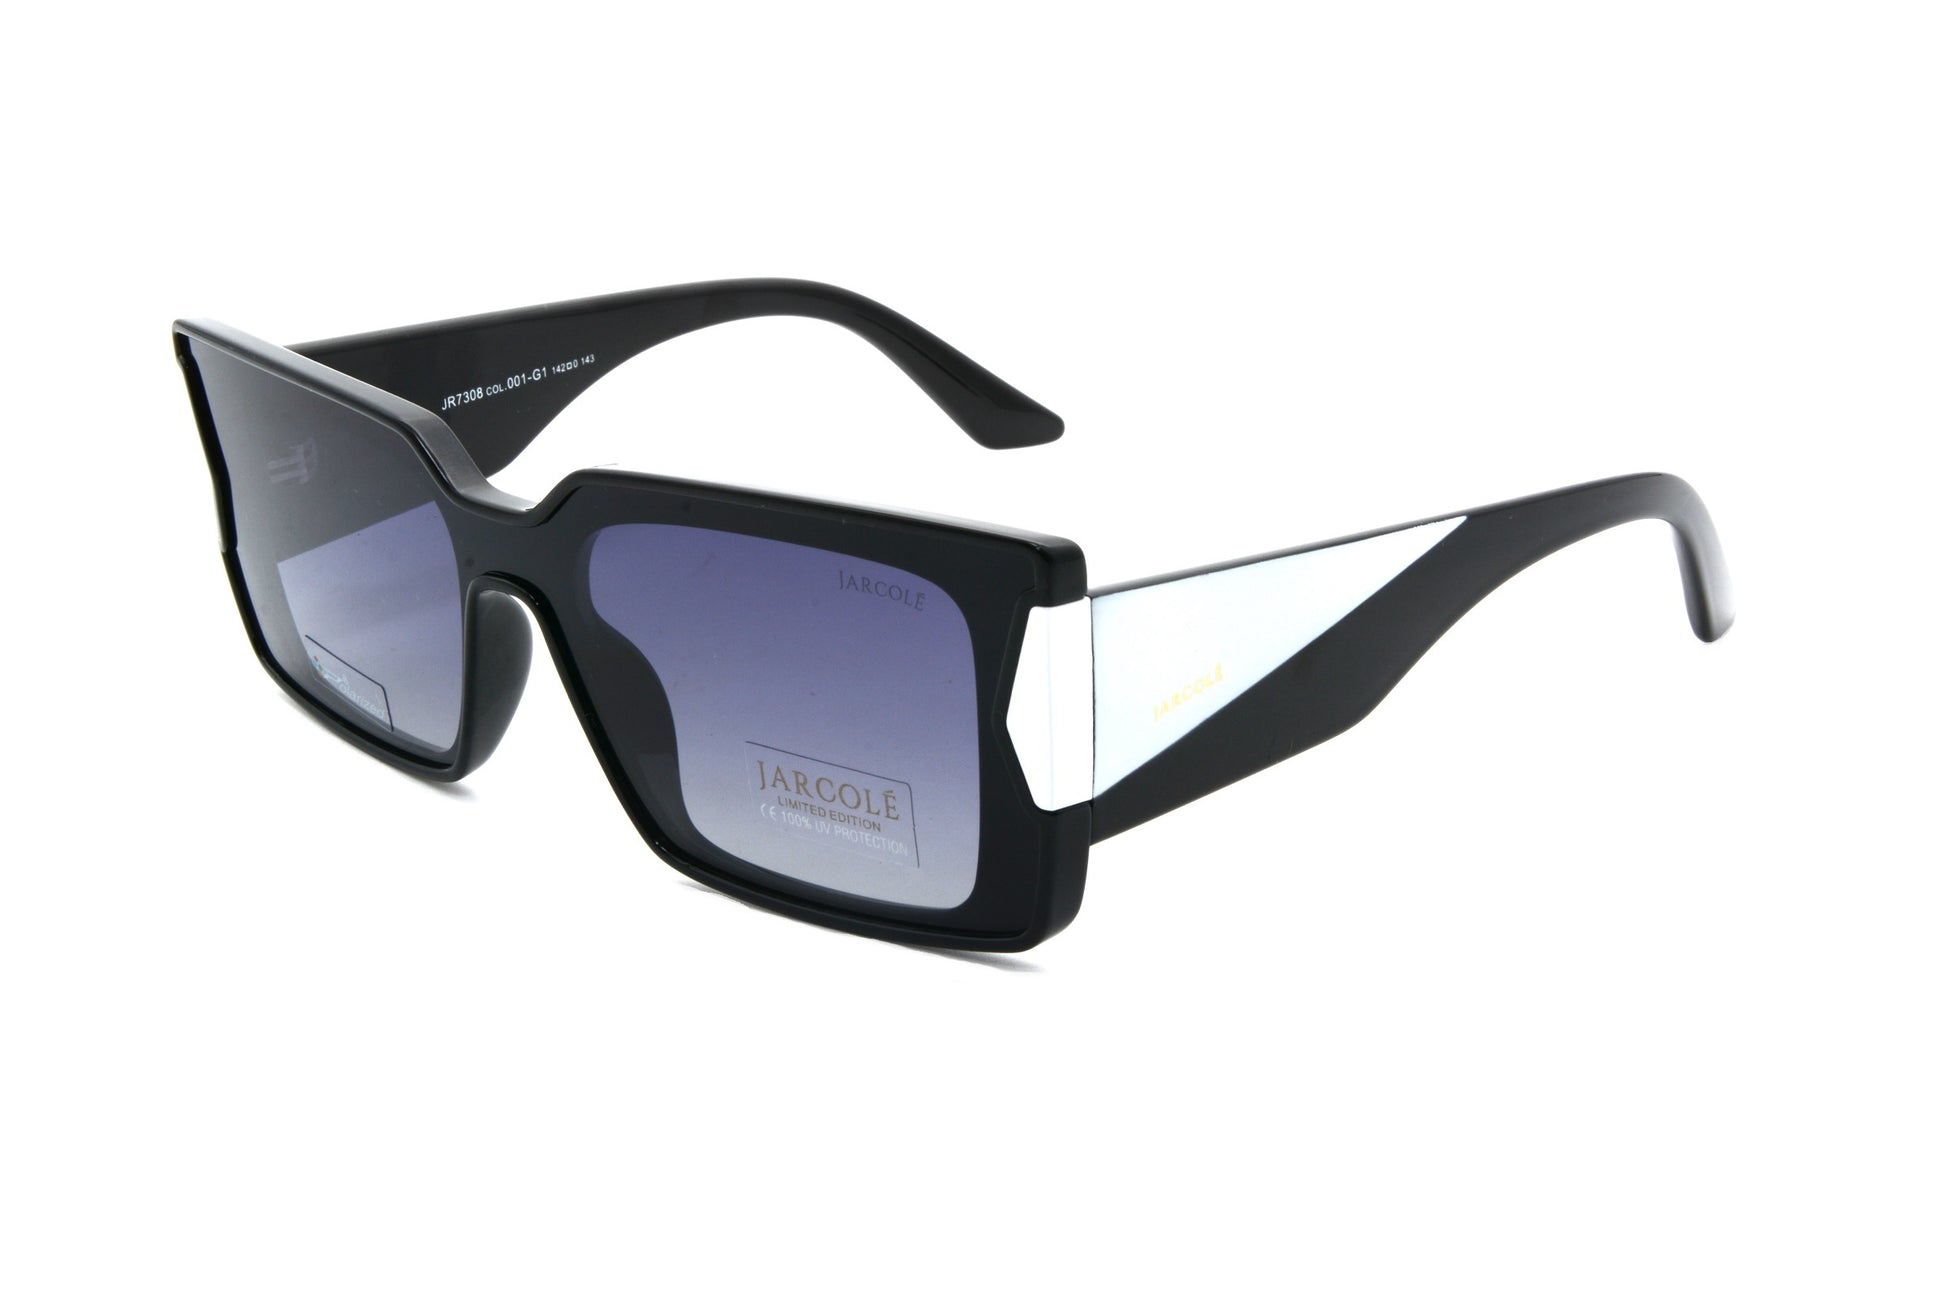 Jarcole sunglasses JR7308 001-G1